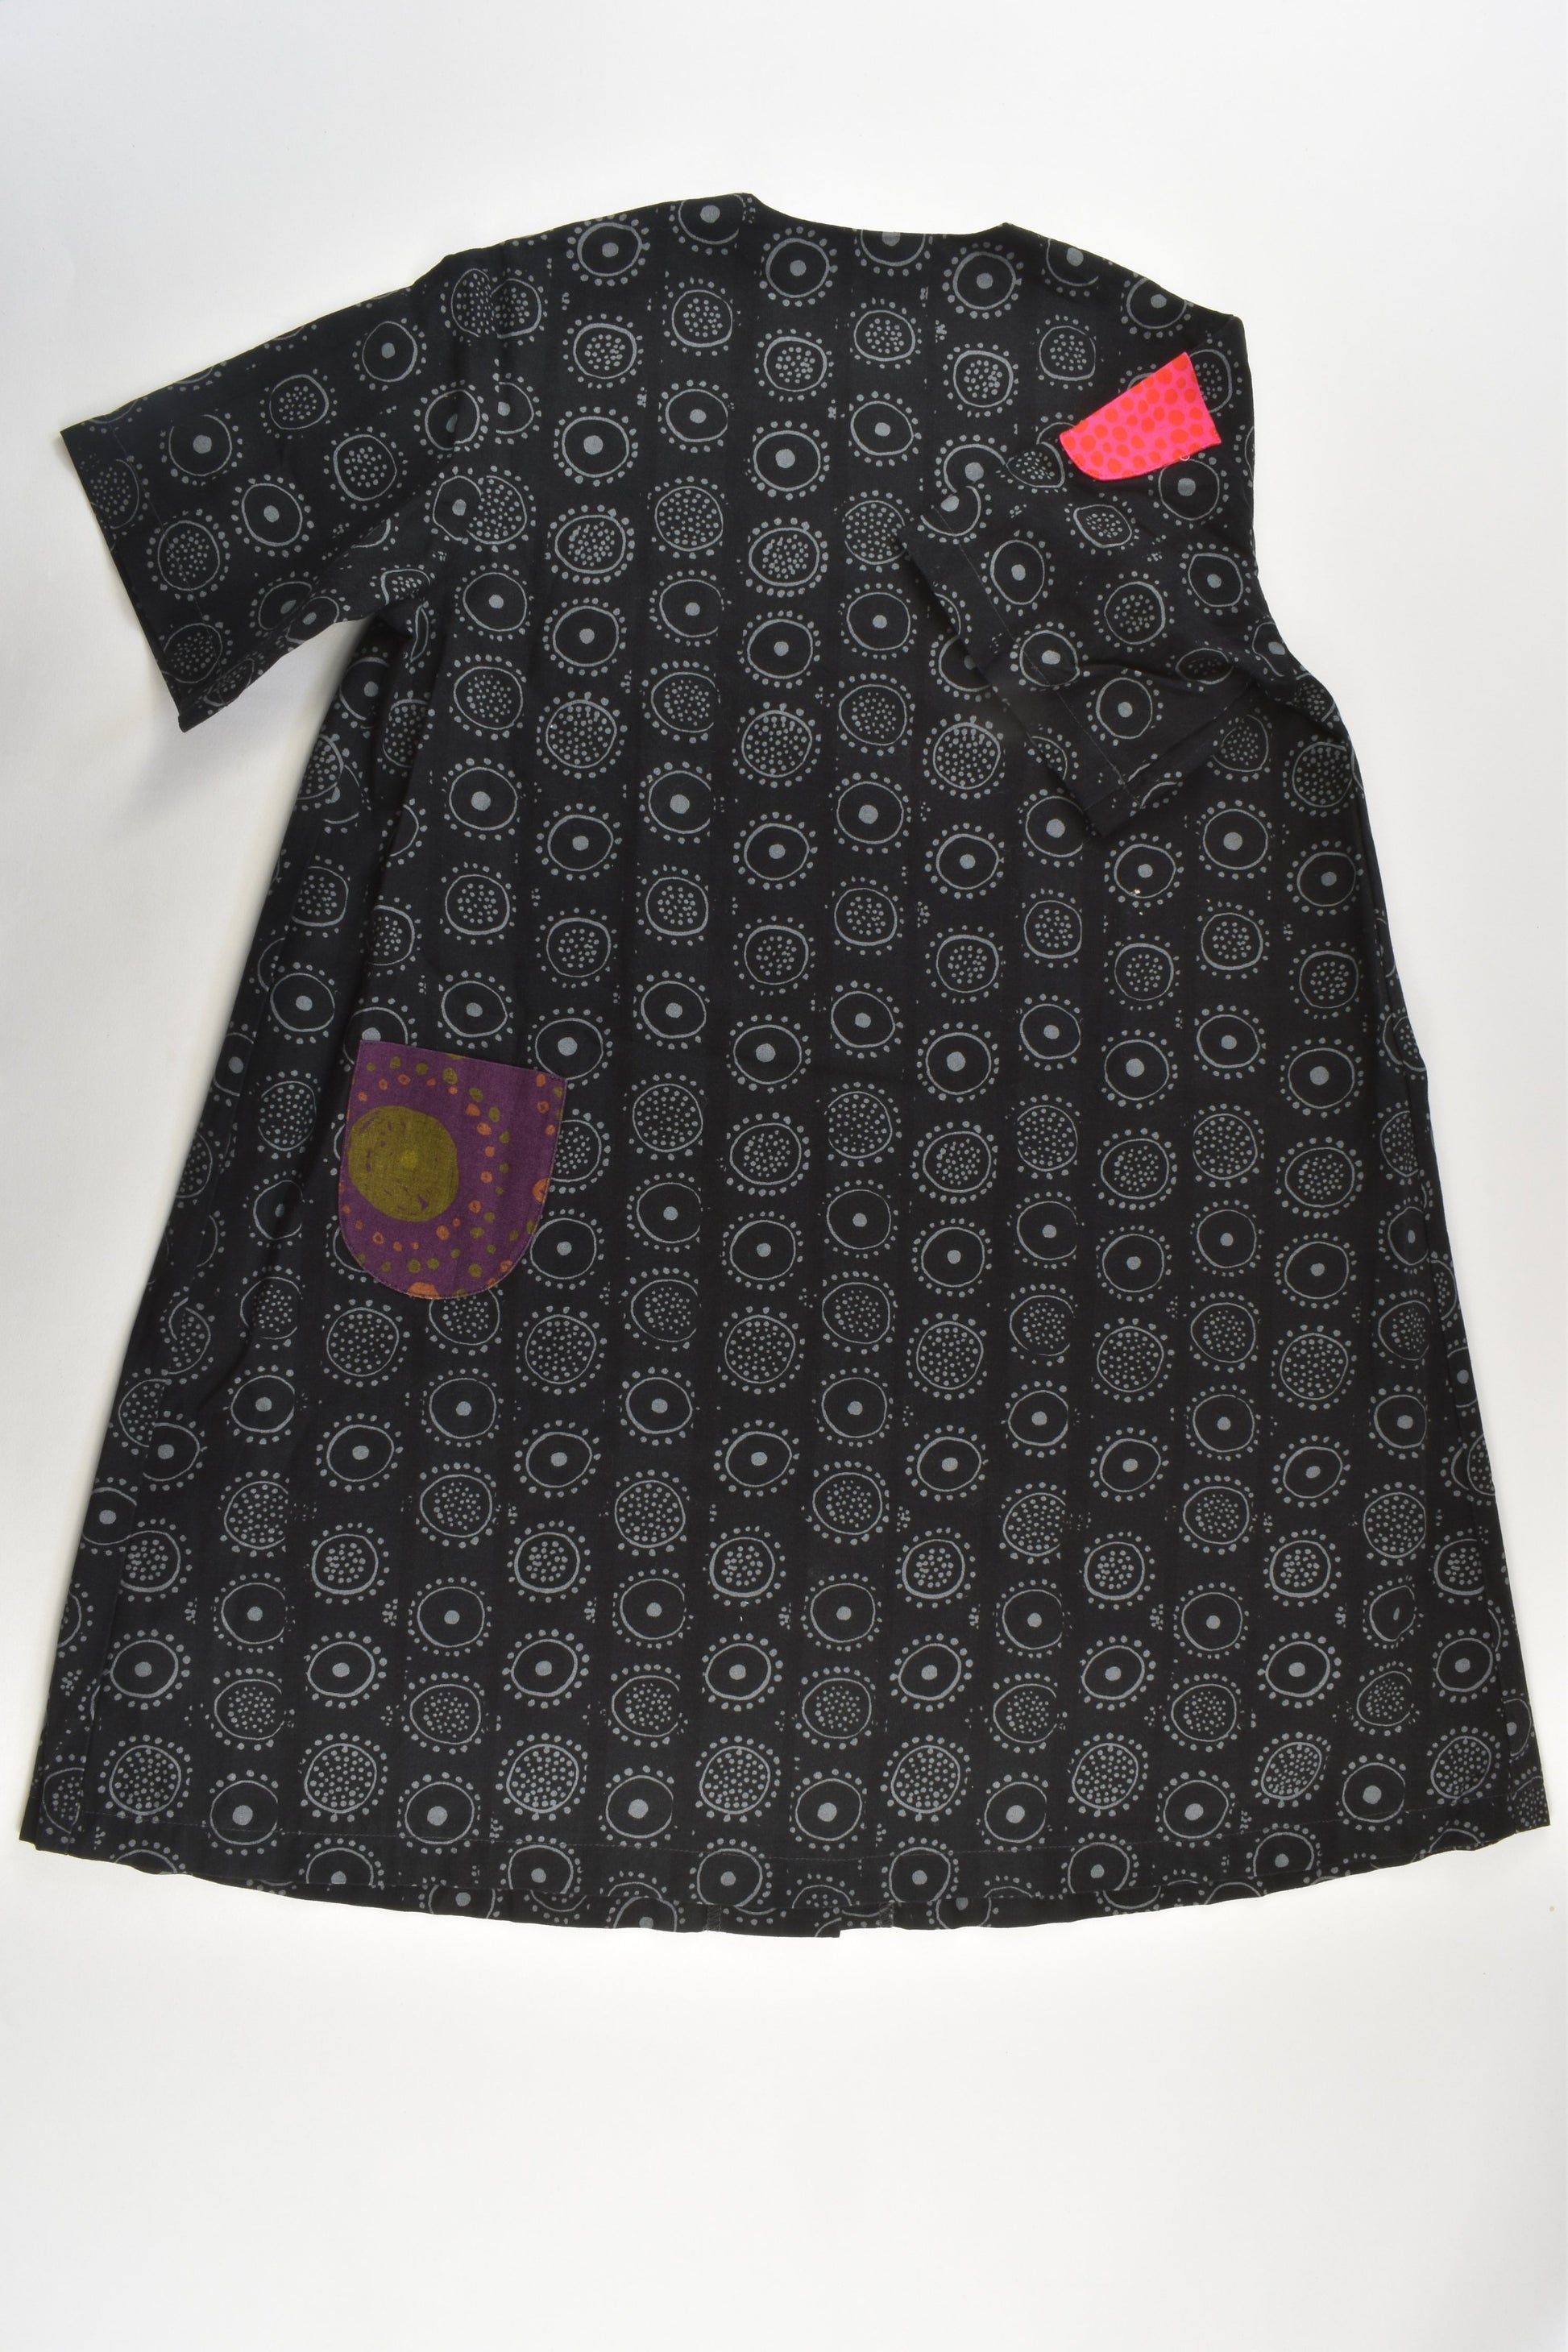 Marimekko Size 8-9 (128-134 cm) 'Iloinen Takki' Dress